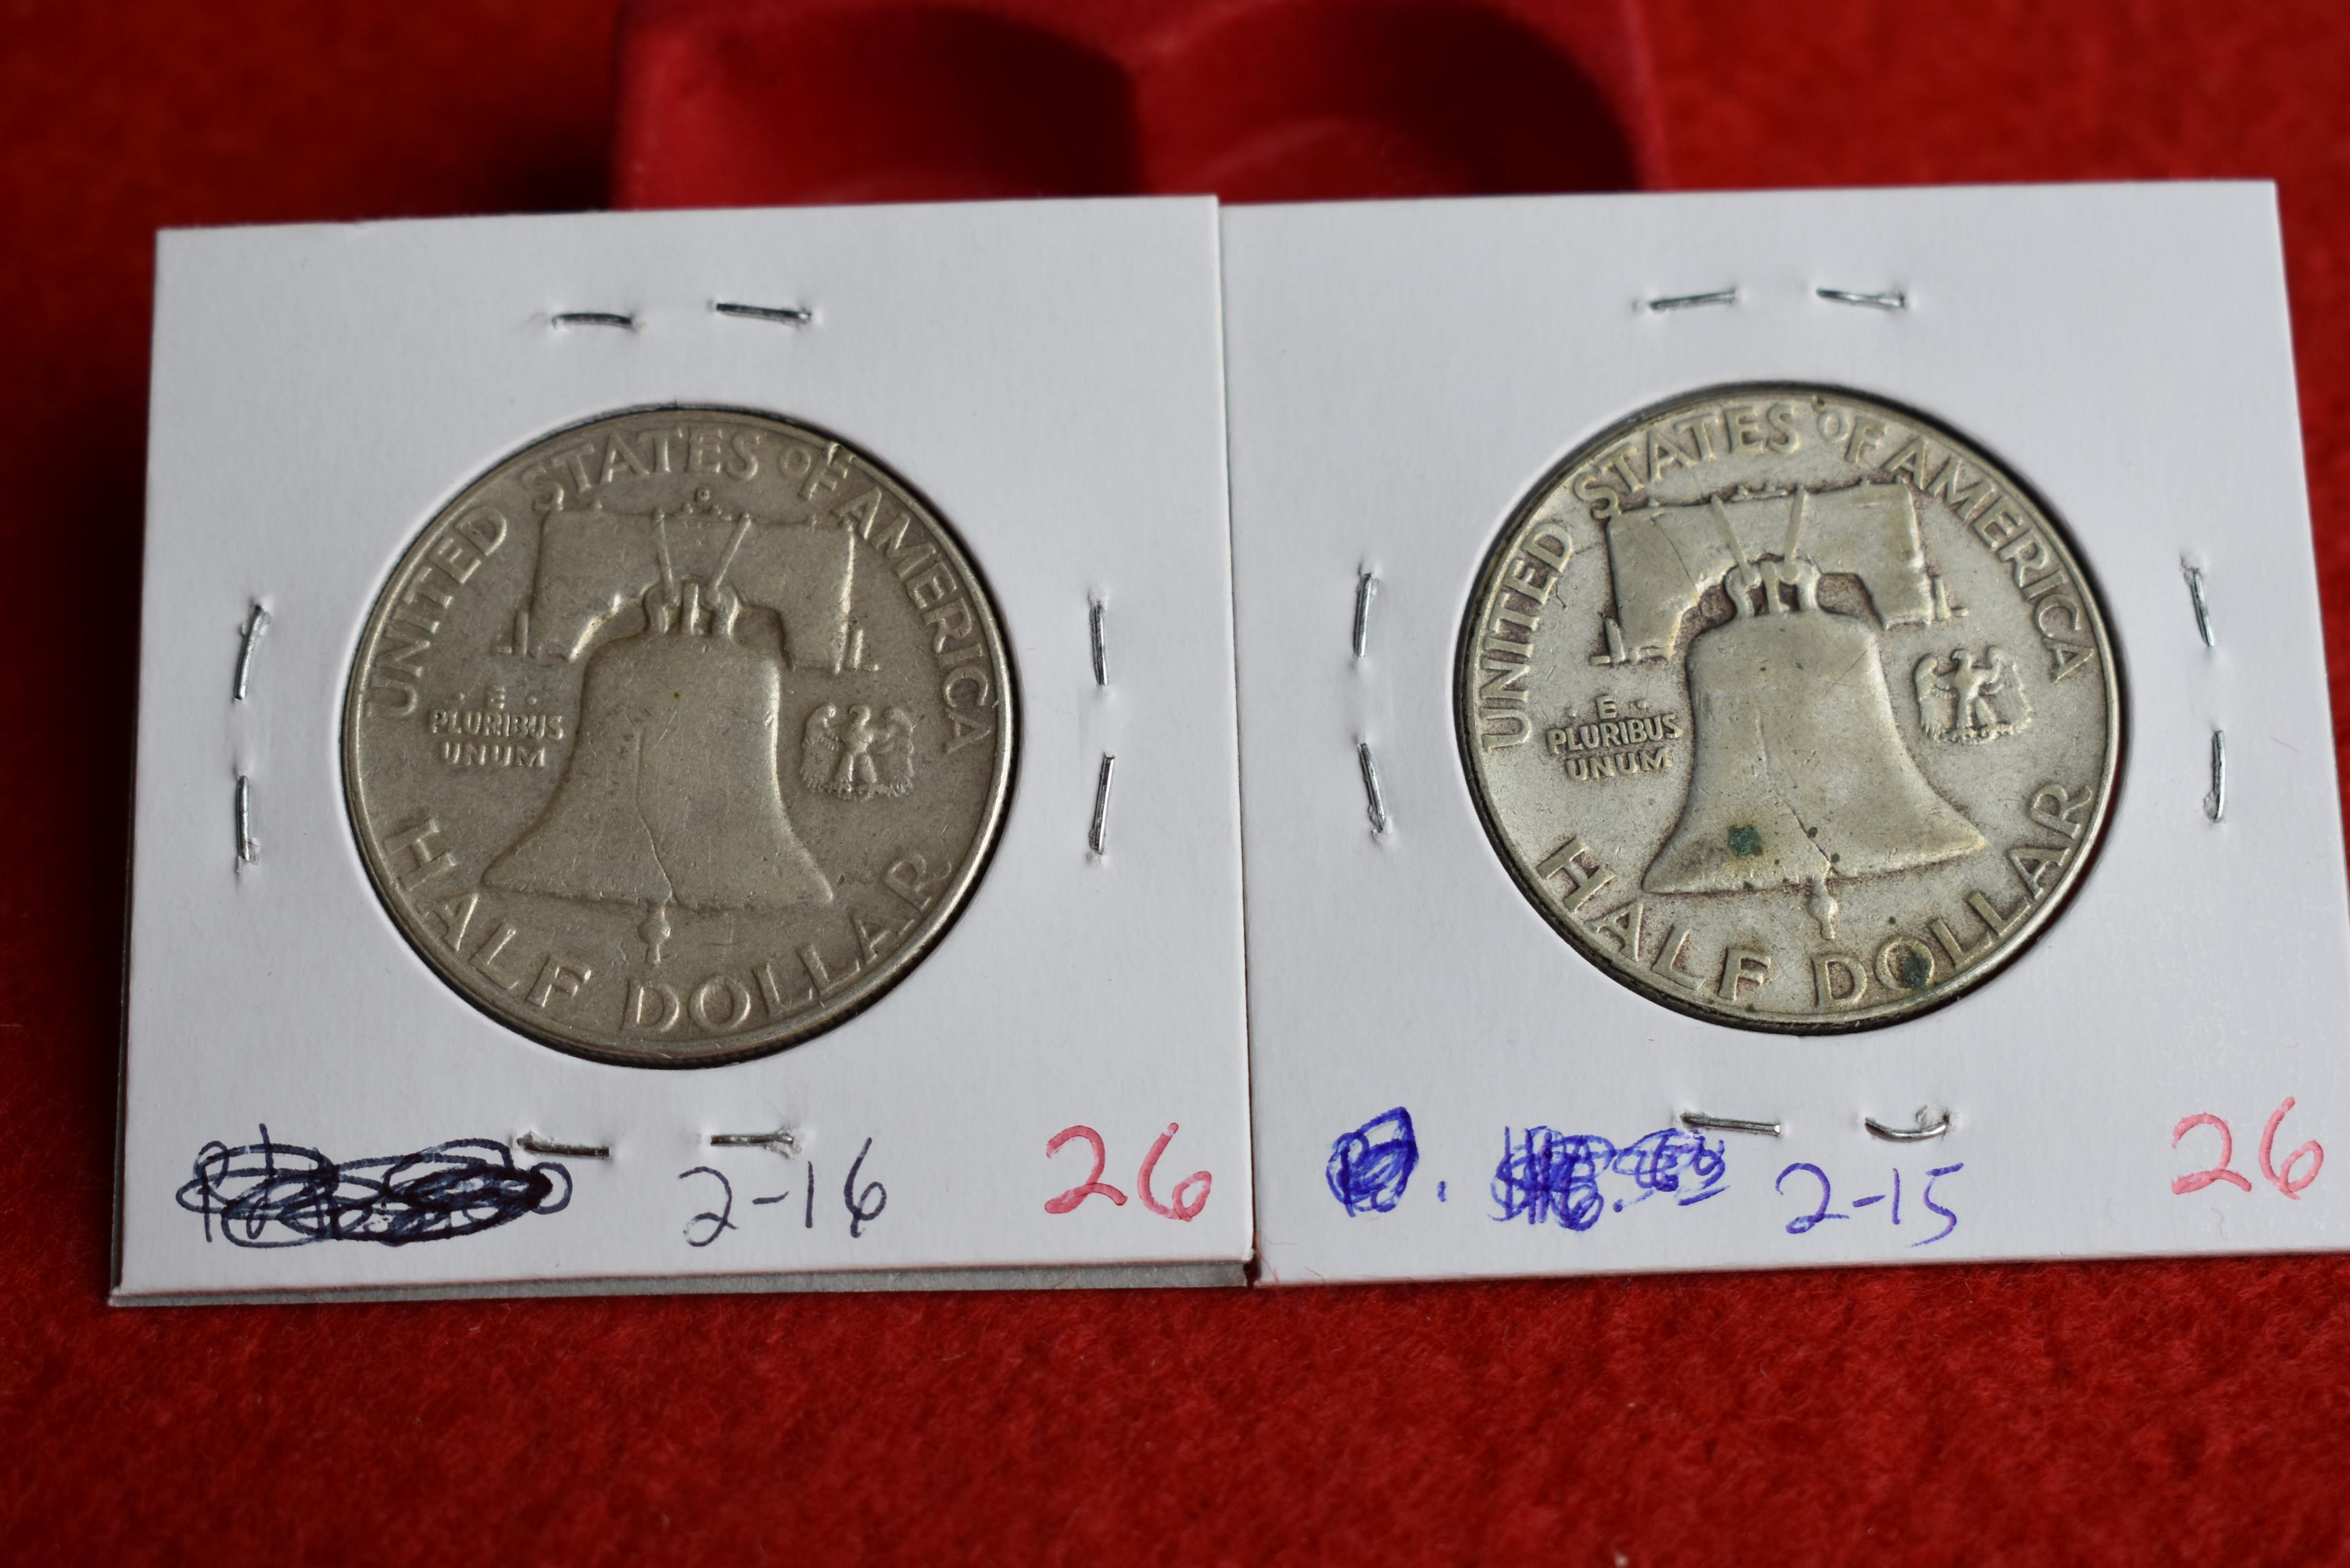 1954-d & 1954 Franklin Half Dollars